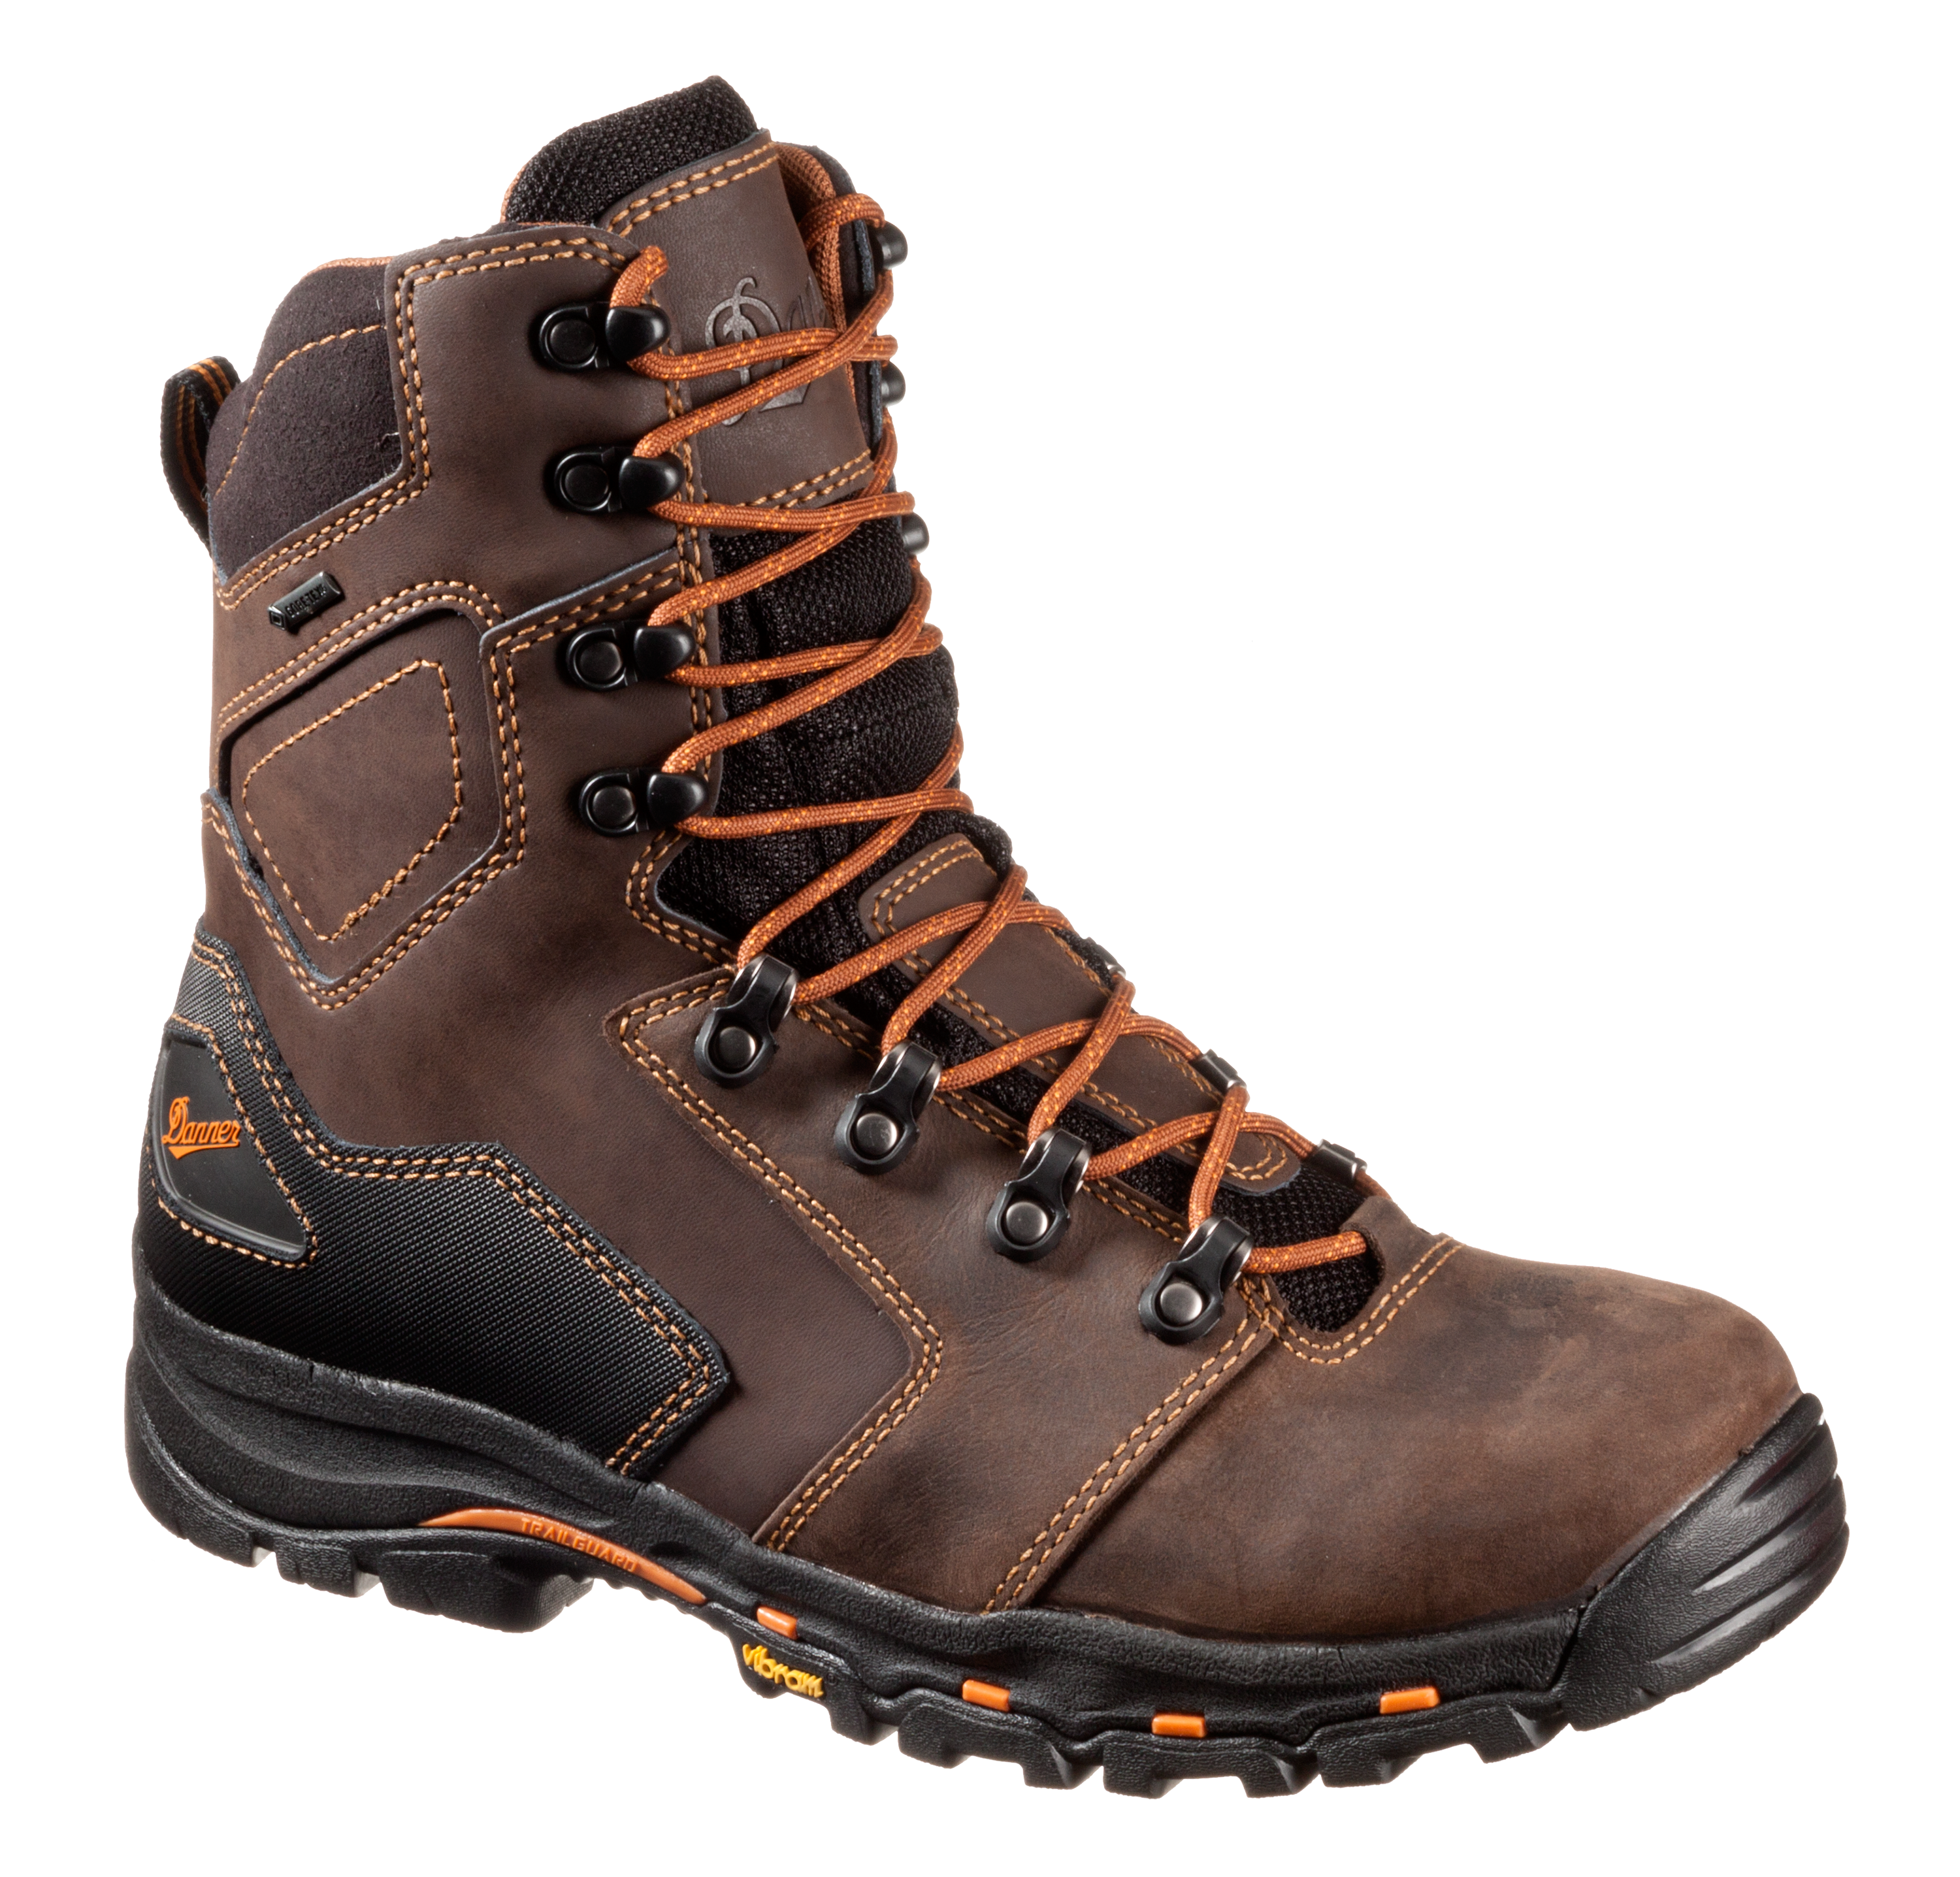 Danner Vicious GORE-TEX Work Boots for Men - Brown - 9.5 M